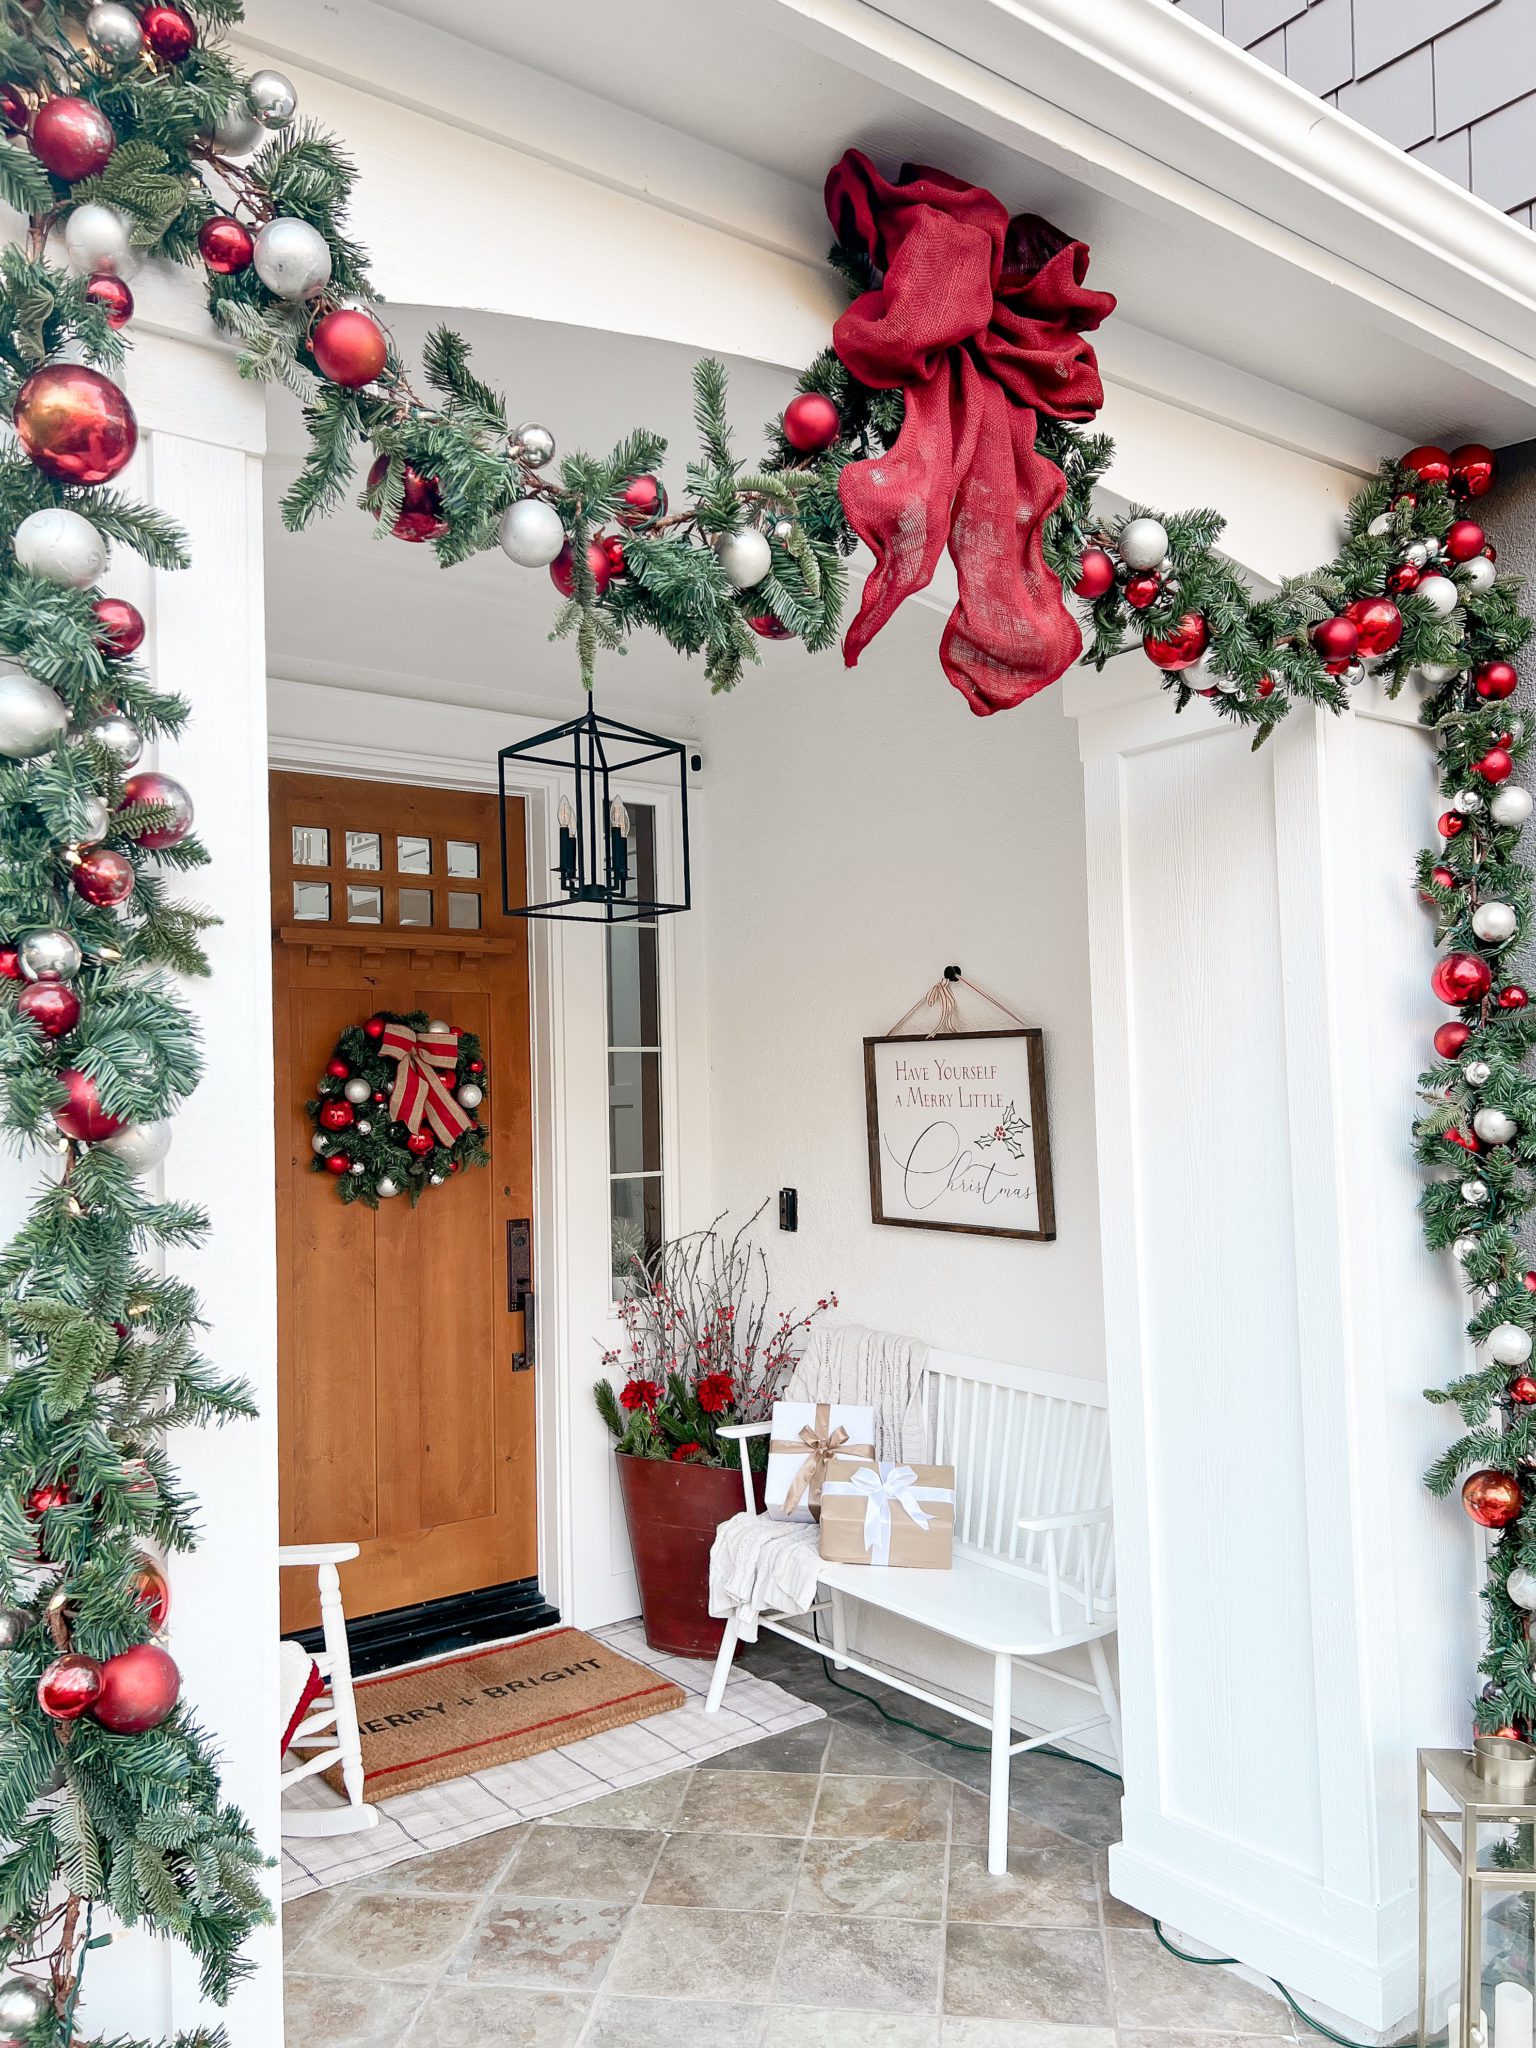 How to Make your Home Festive - A Classy Christmas Home Tour